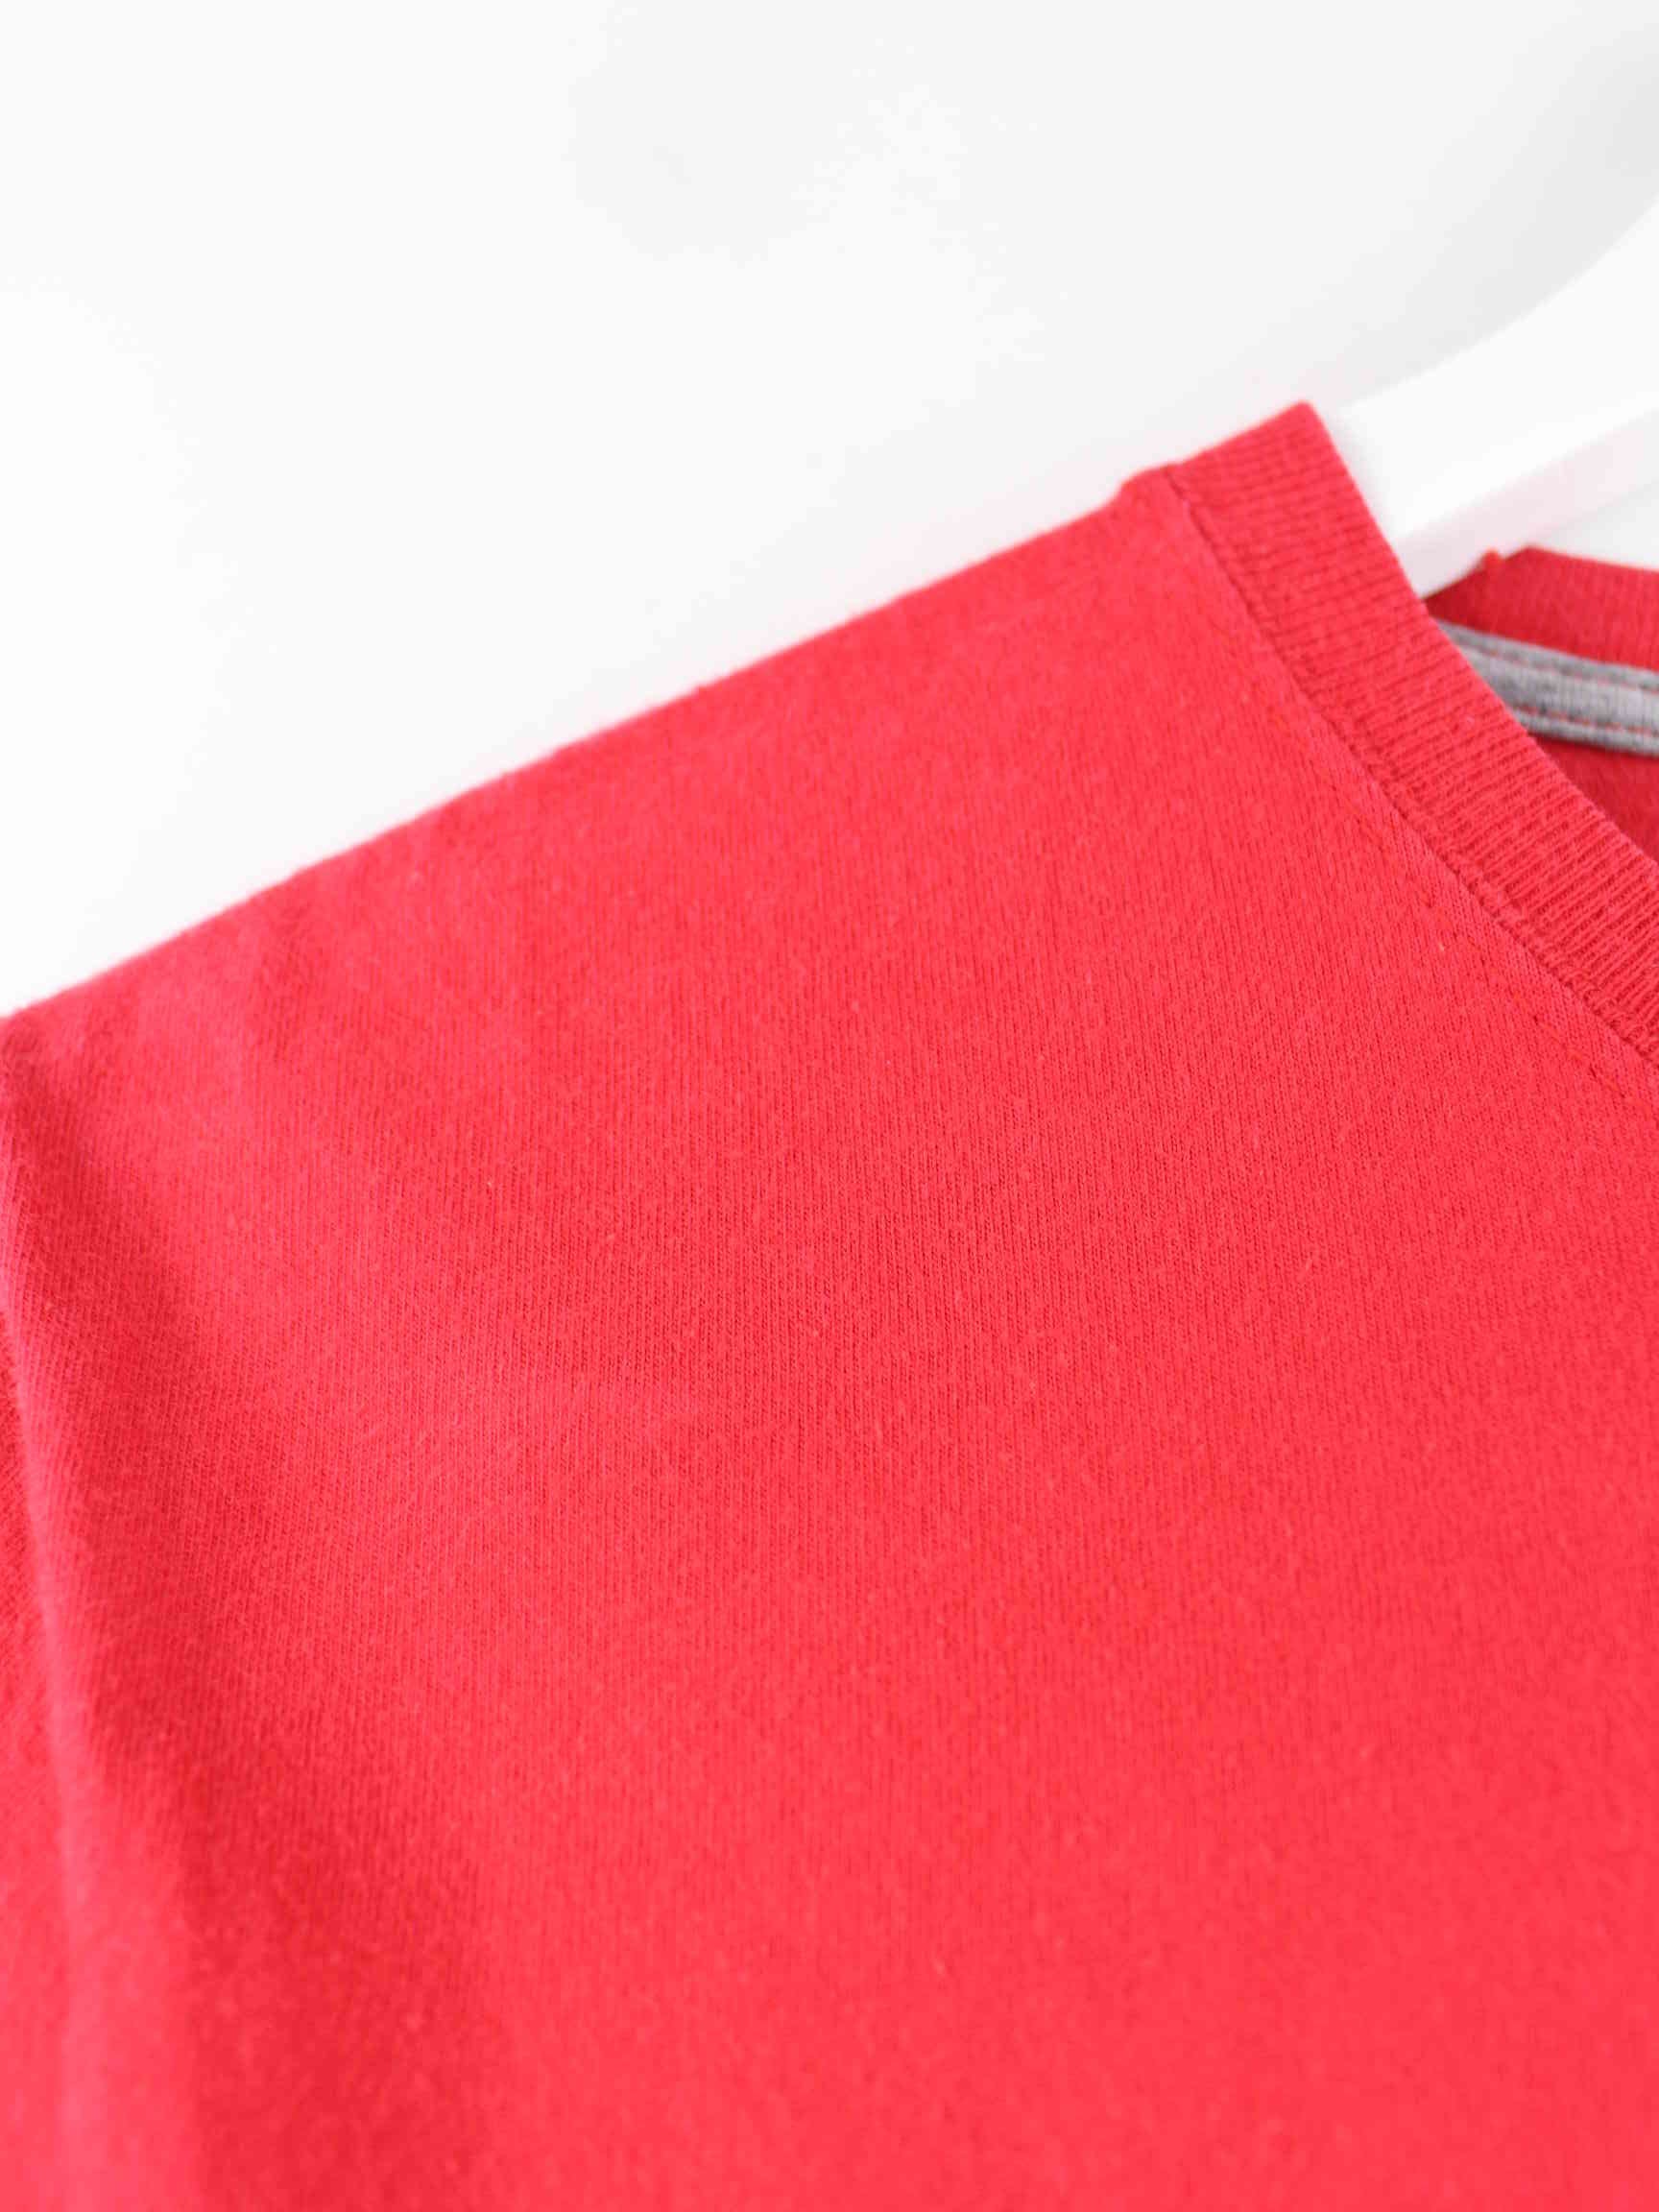 Nike Boston Redsox Print T-Shirt Rot S (detail image 2)